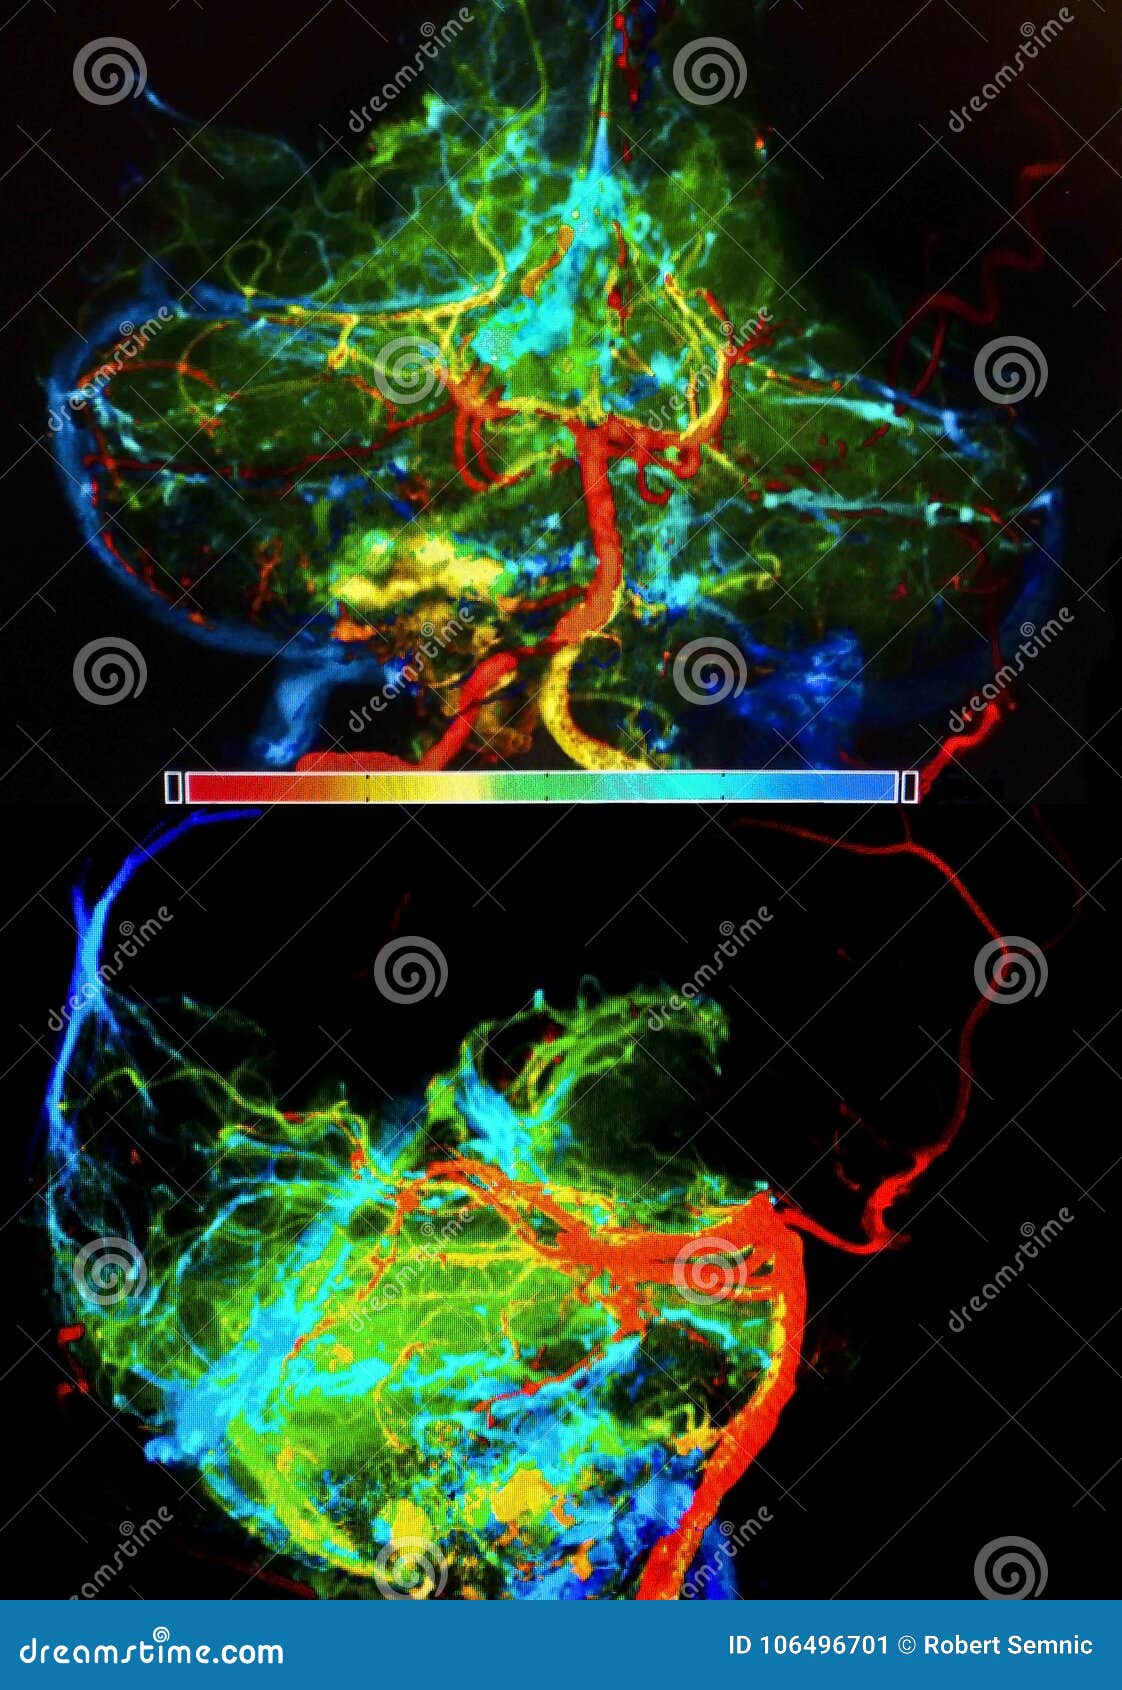 brain arteries an veins, angiography